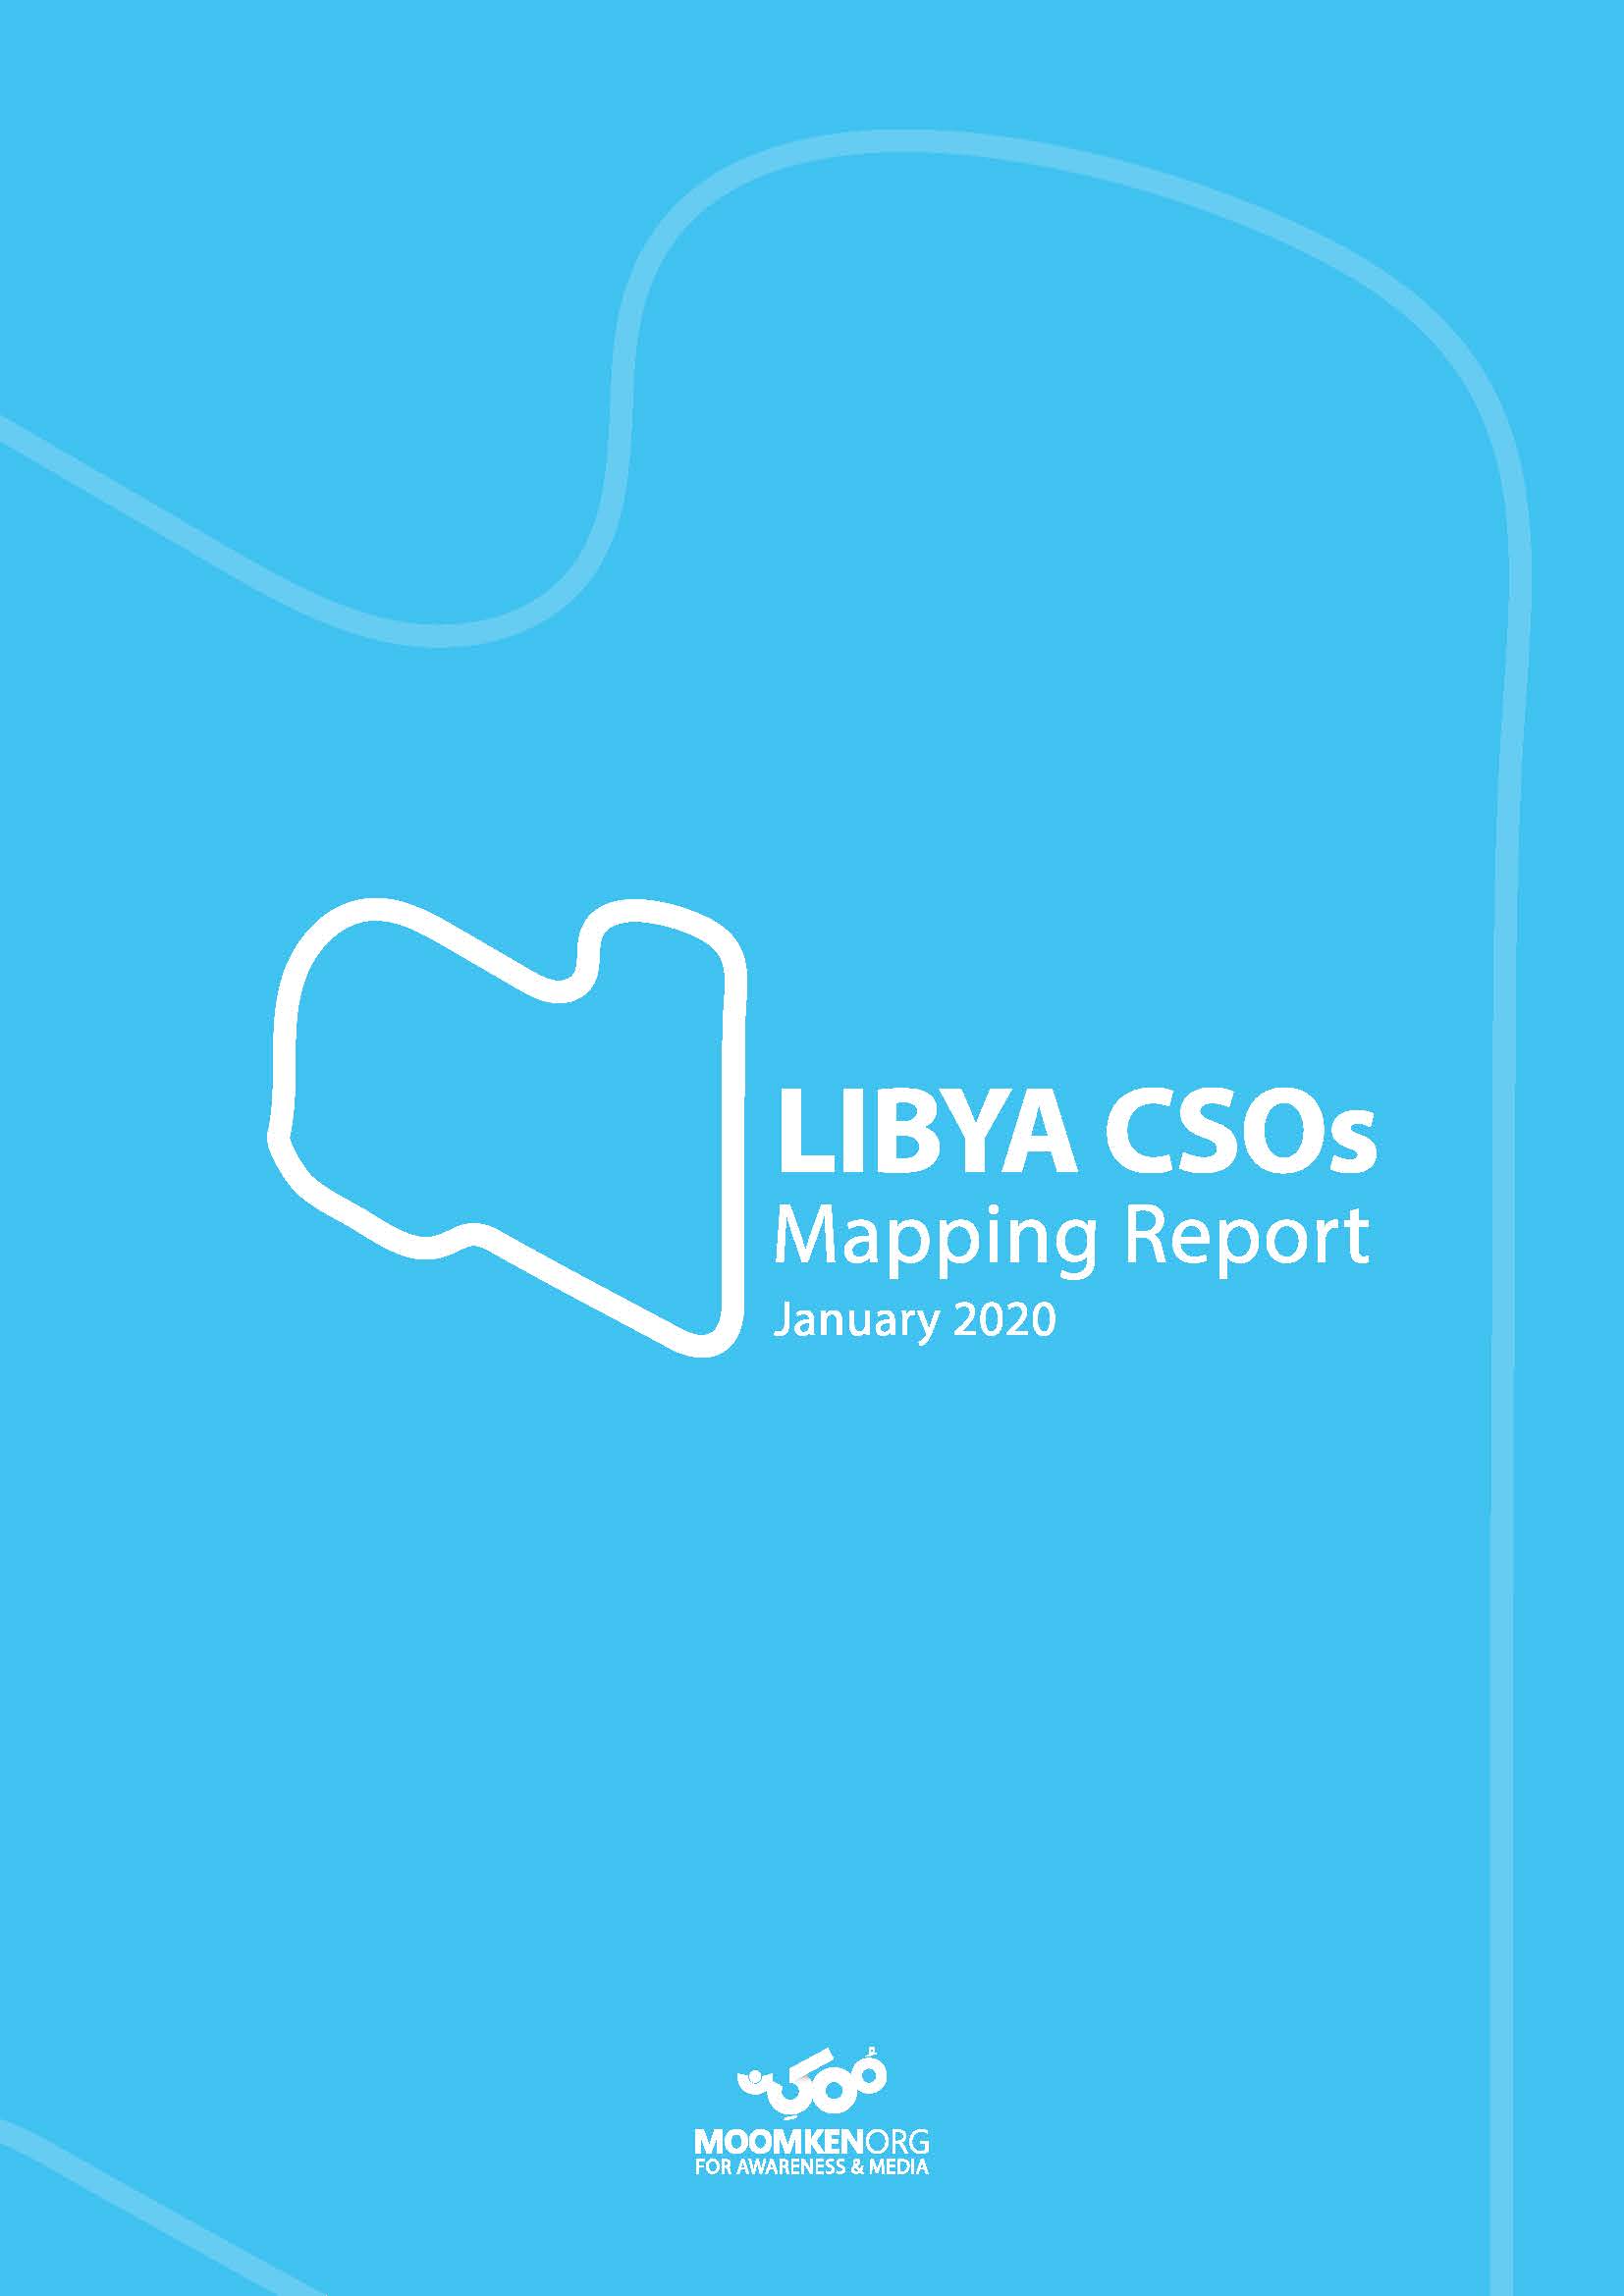 Libya CSOs Mapping Report